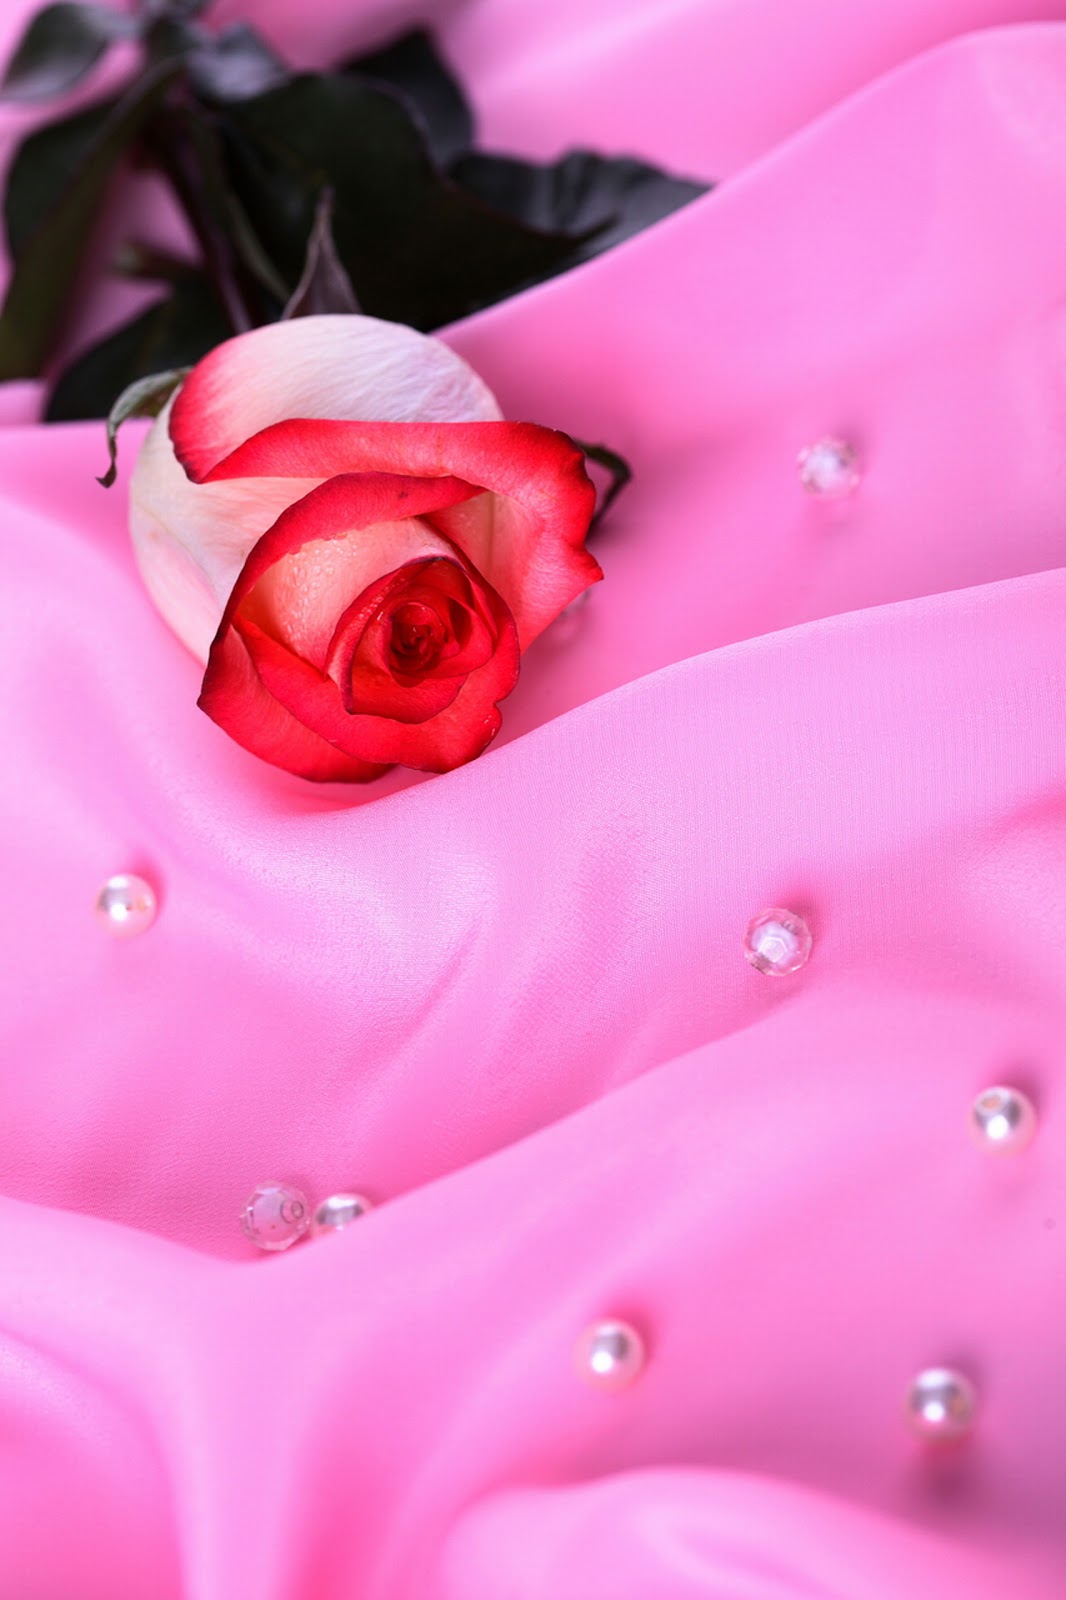 Gambar Bunga Mawar Yang Cantik Cantik GUDANG GAMBAR